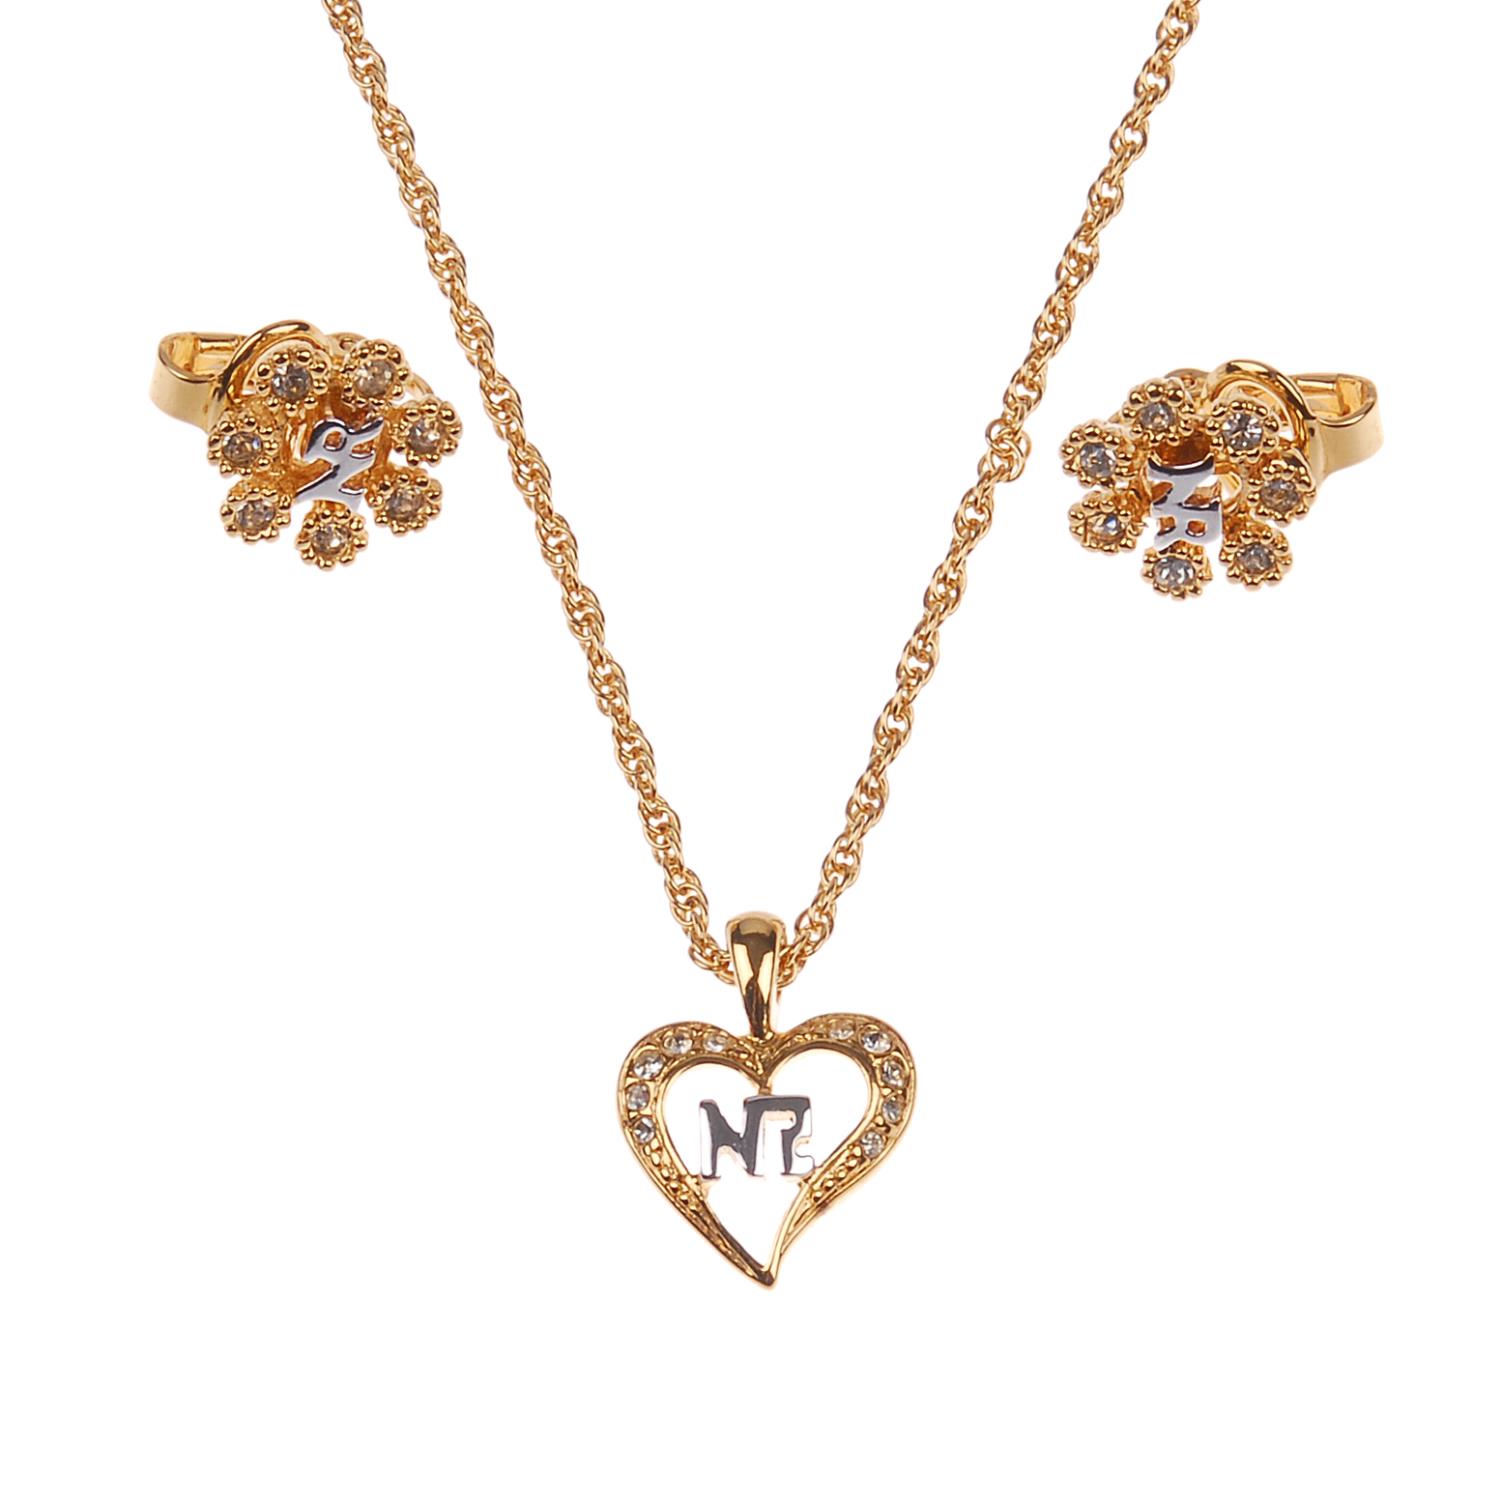 NINA RICCI - a pendant and a pair of ear clips. Designed as a gold-tone heart shaped rhinestone